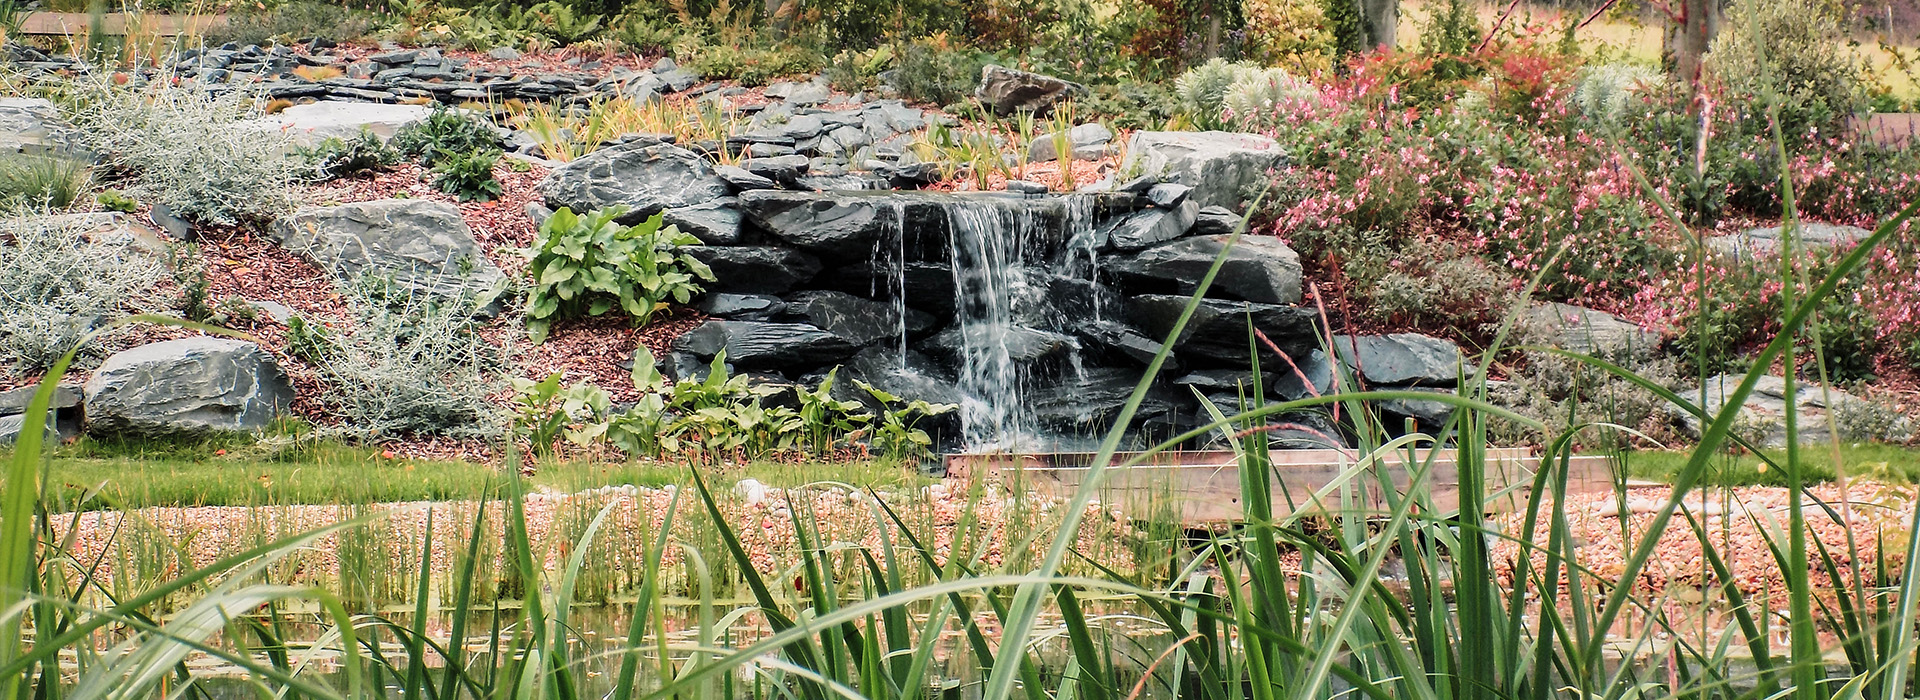 Garden pond waterfall